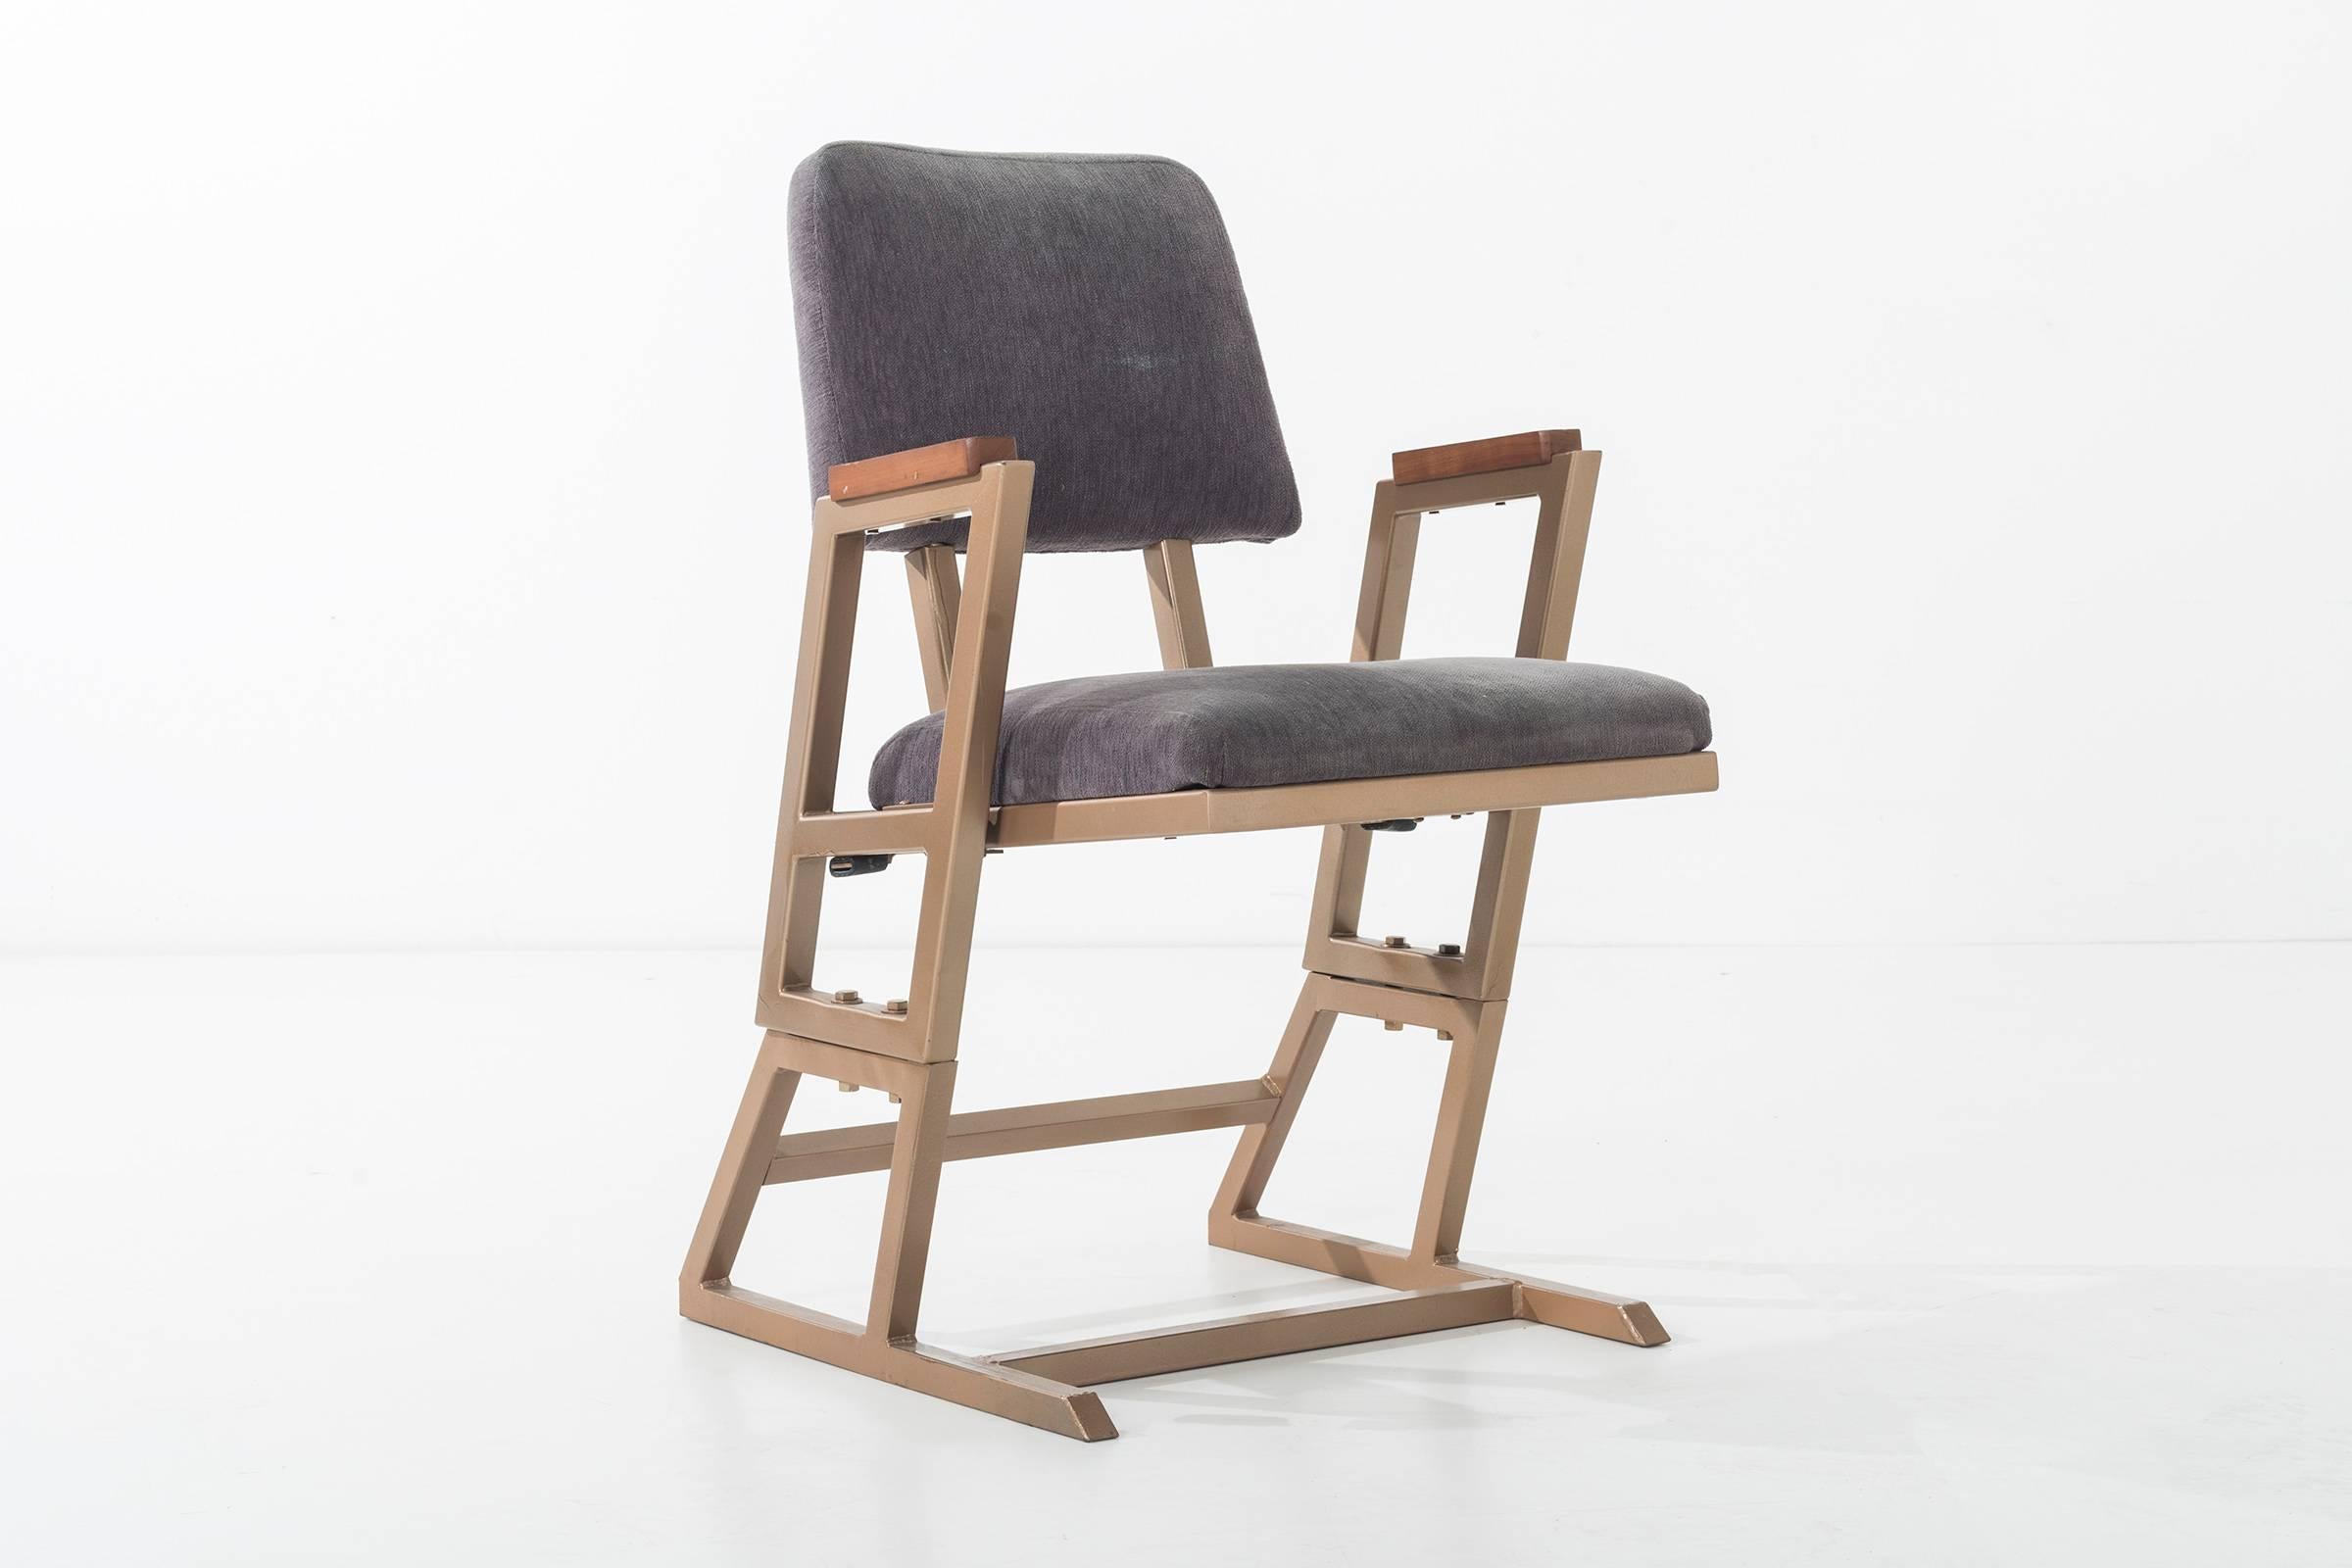 custom chairs for sale